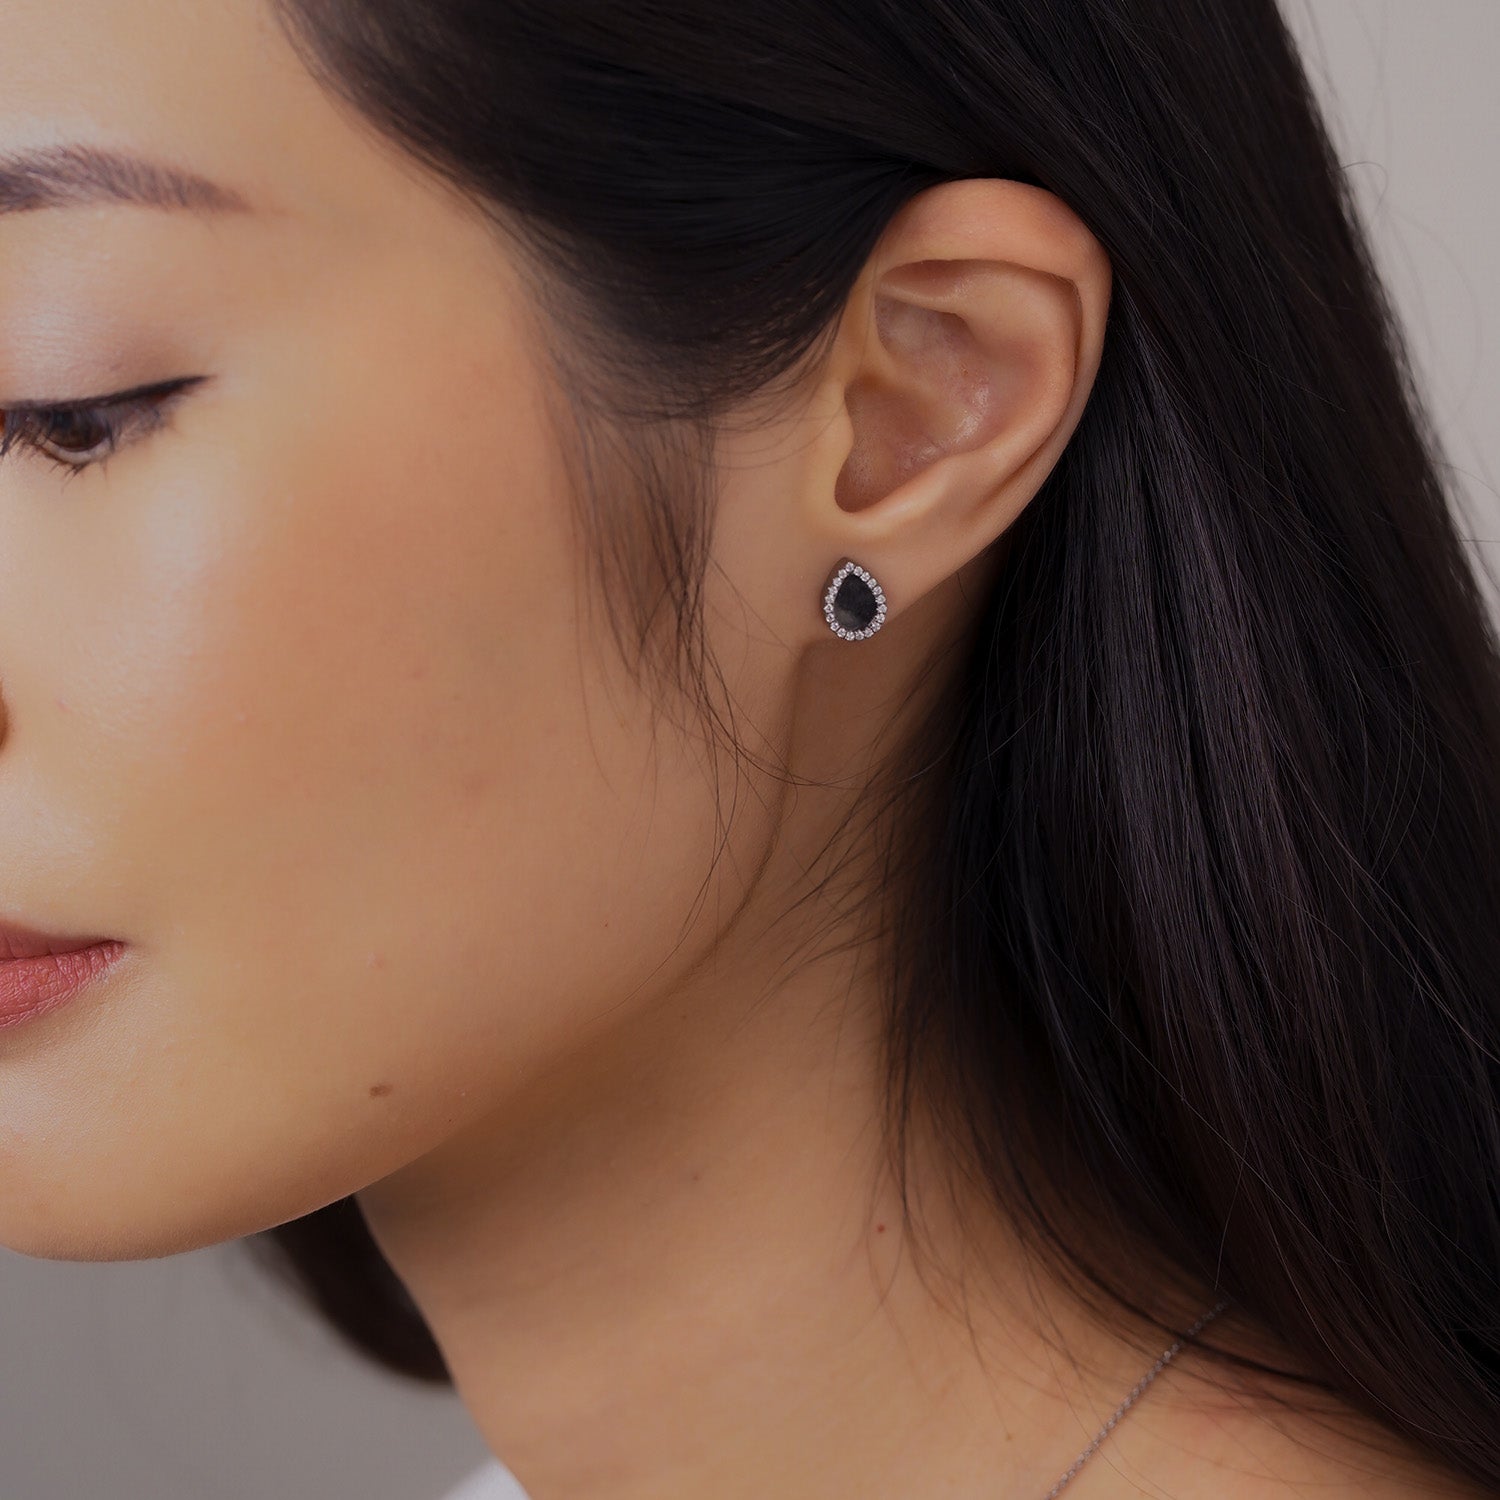 AQUA 水 Earring Studs in Black Jade